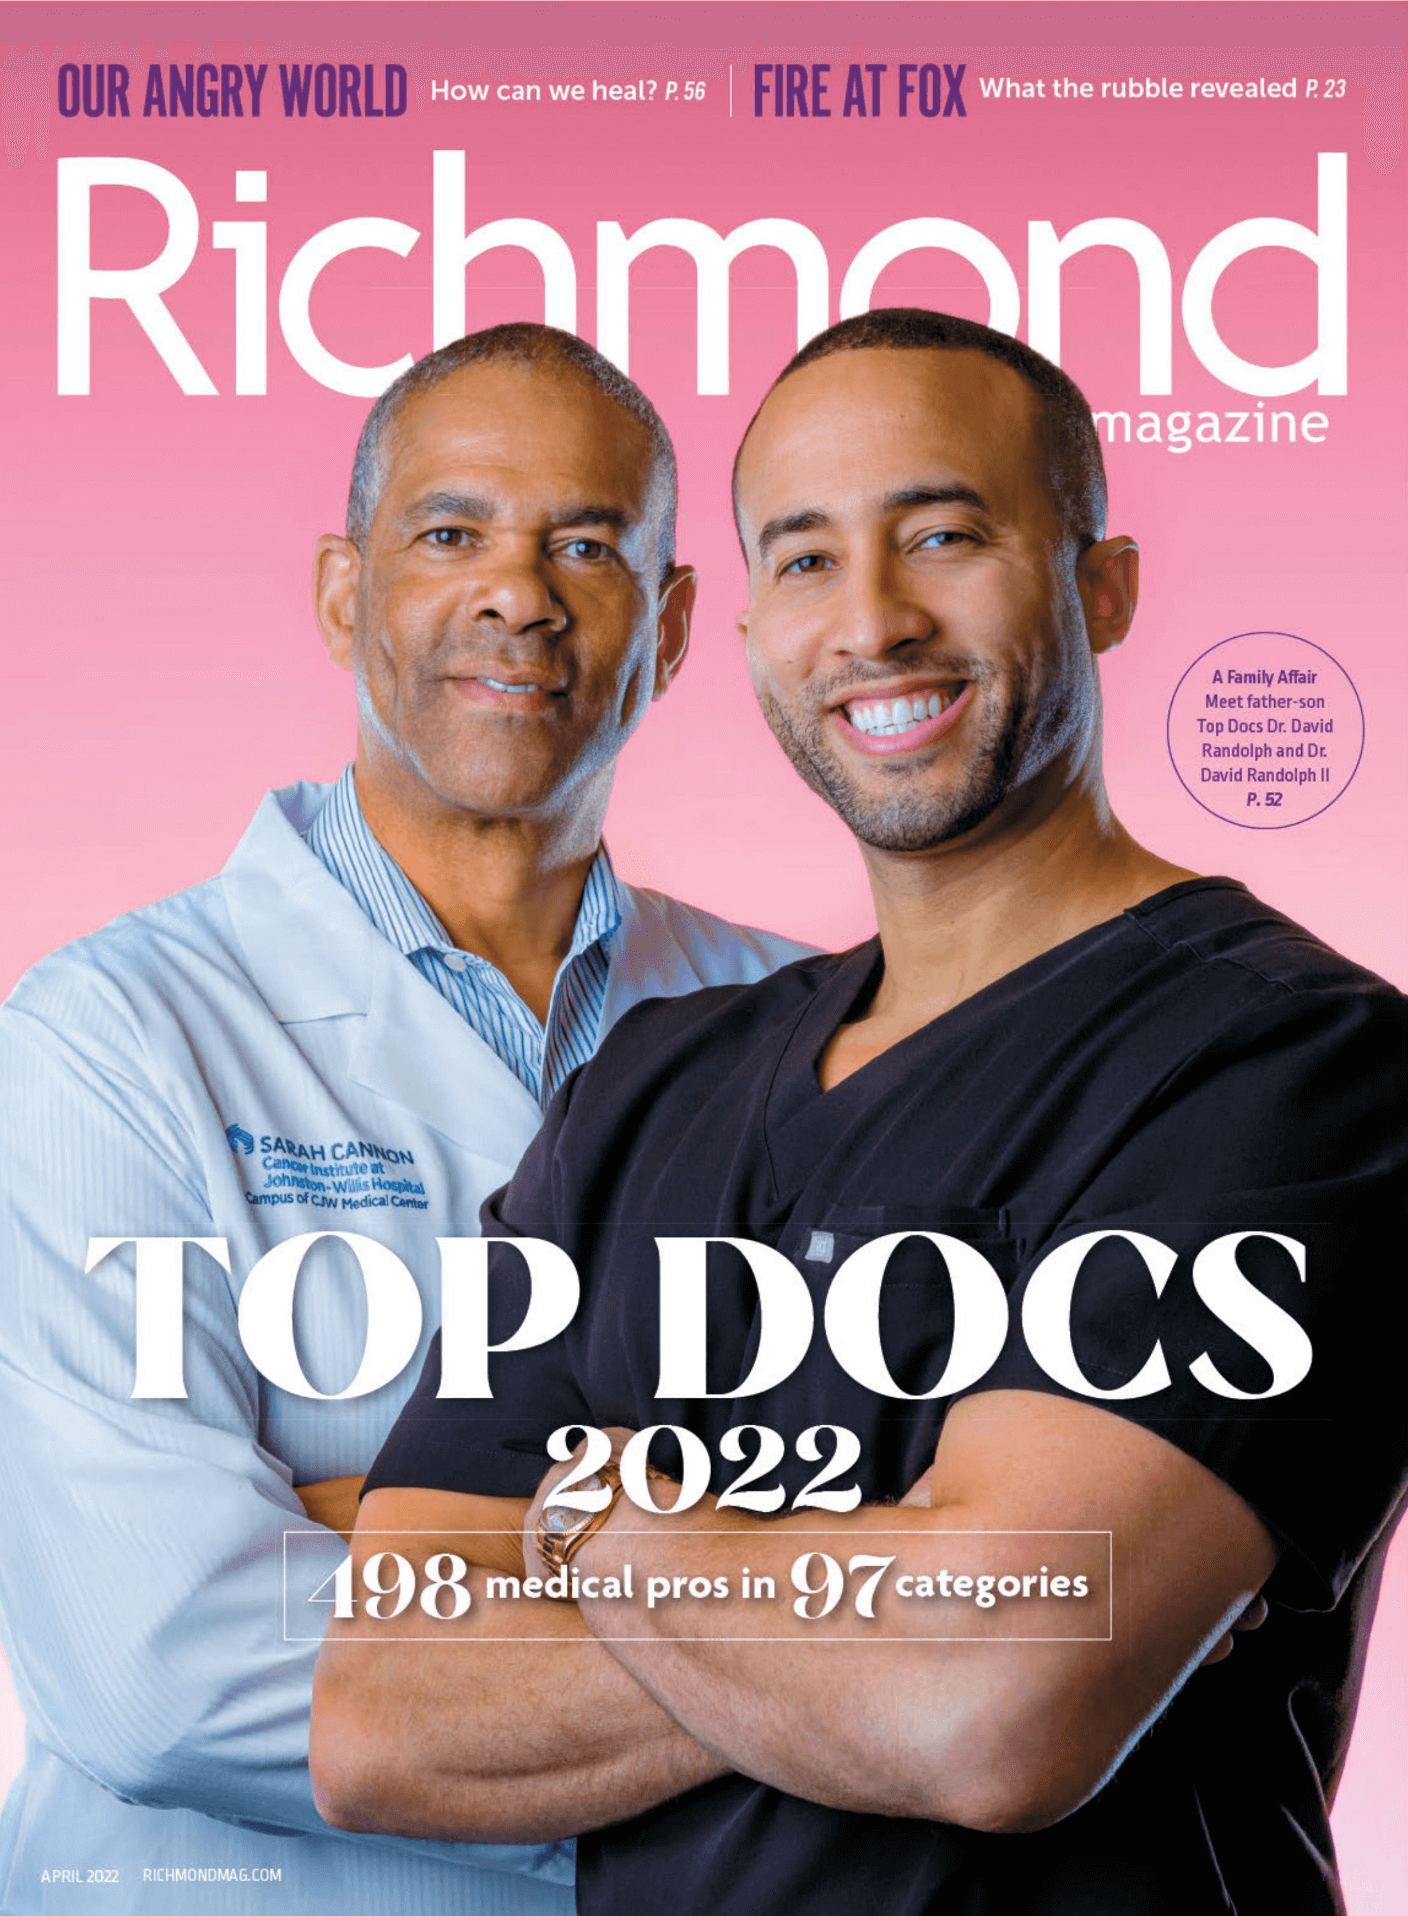 Richmond Magazine Top Docs 2022 Vascular Surgery Associates